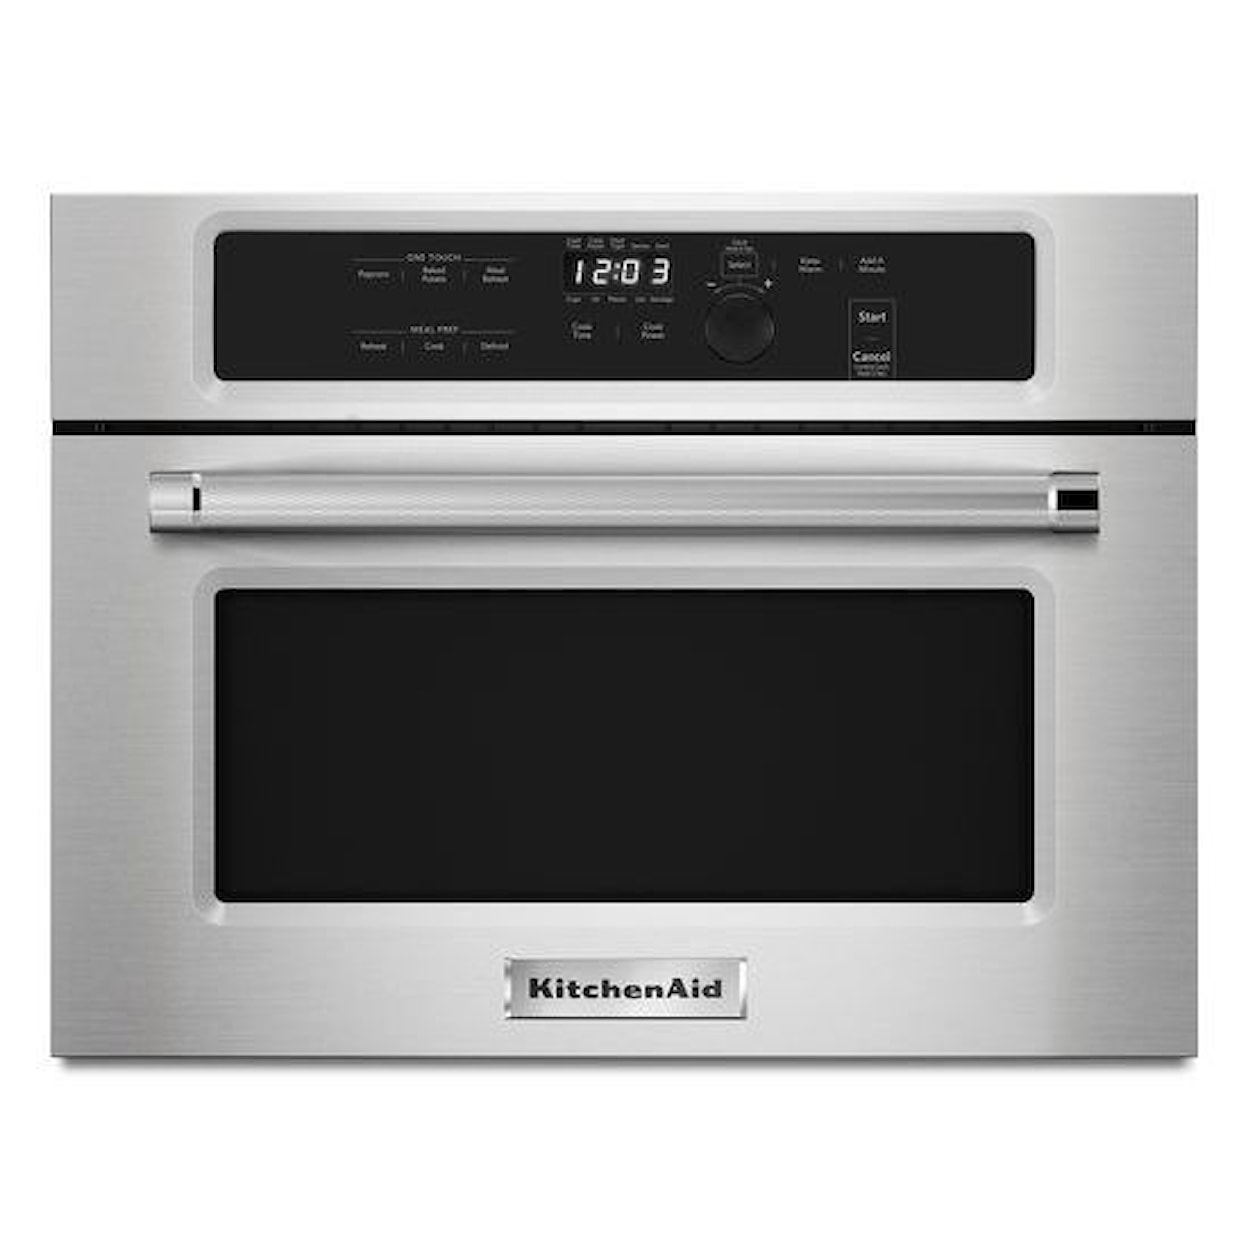 KitchenAid Microwaves - Kitchenaid 24" Built-In Microwave Oven